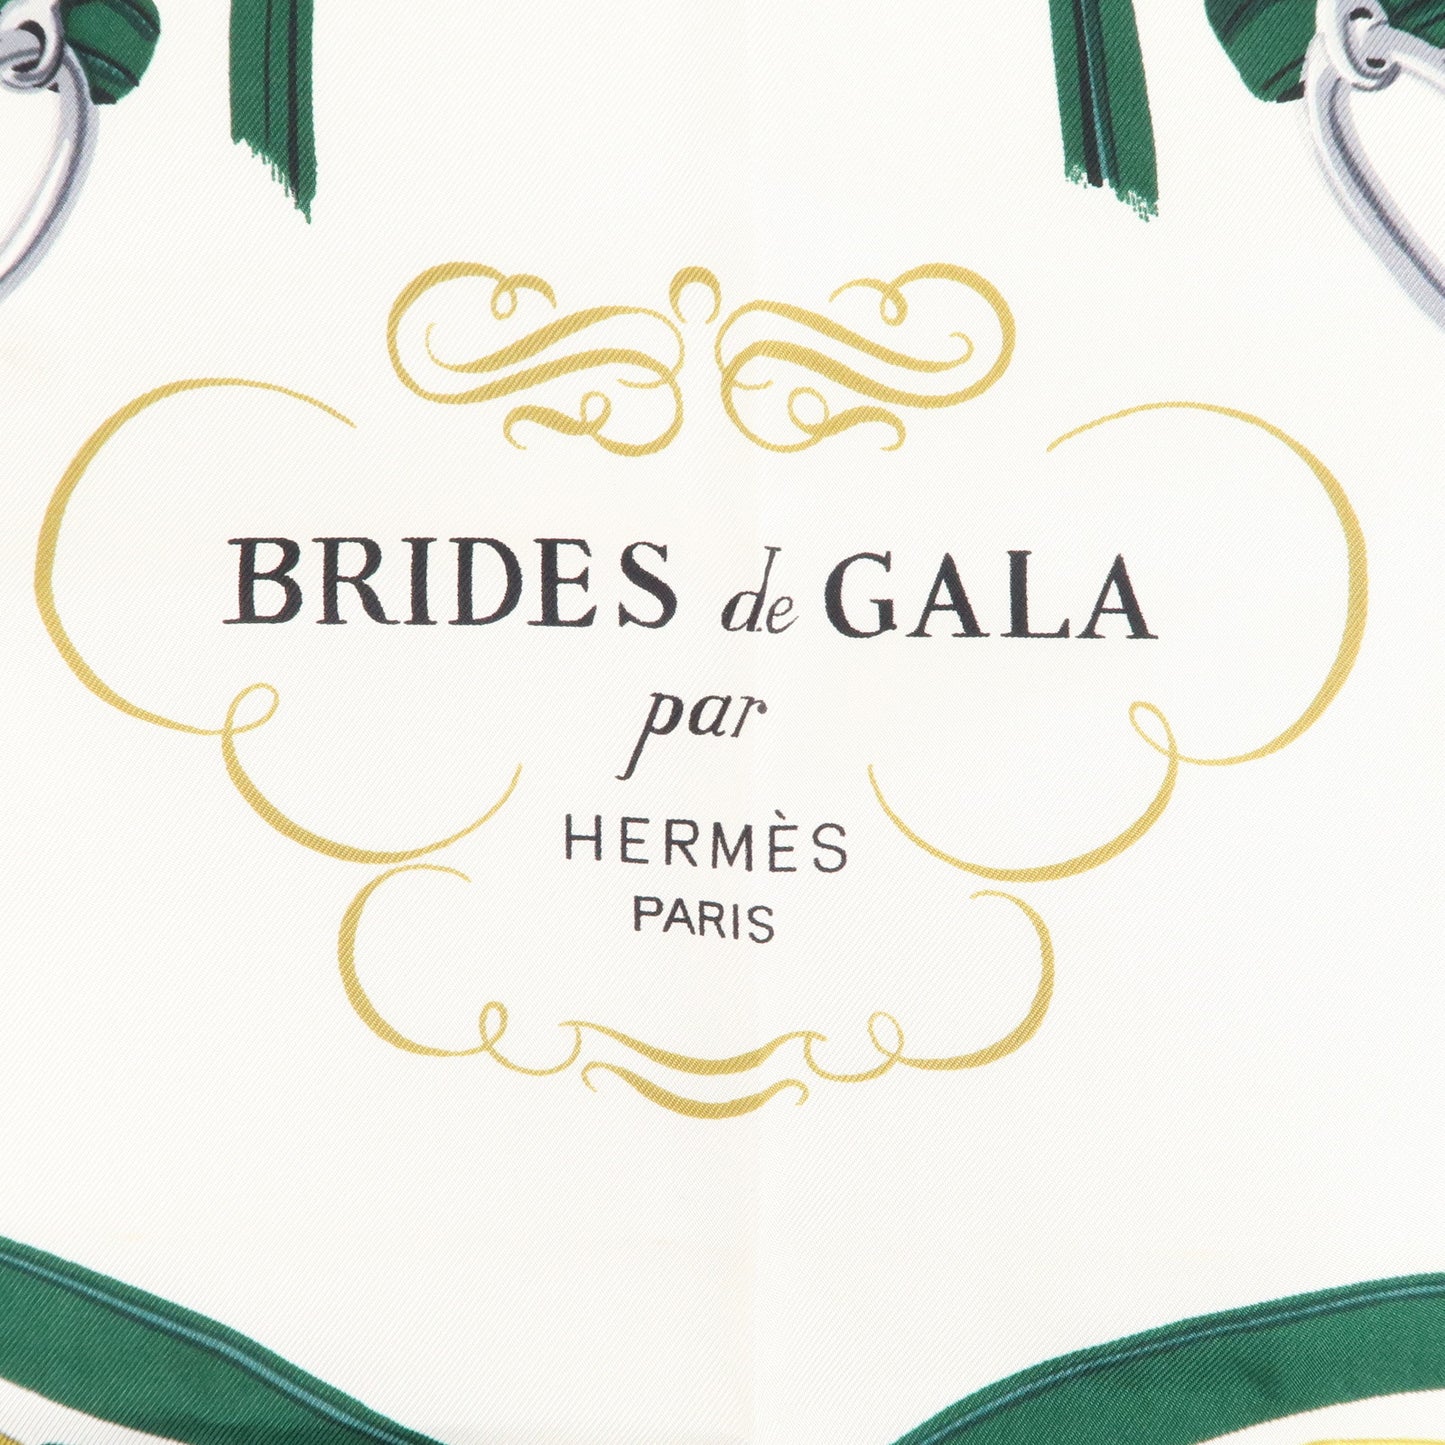 HERMES Carre 90 Silk 100% Scarf BRIDES de GALA Green White